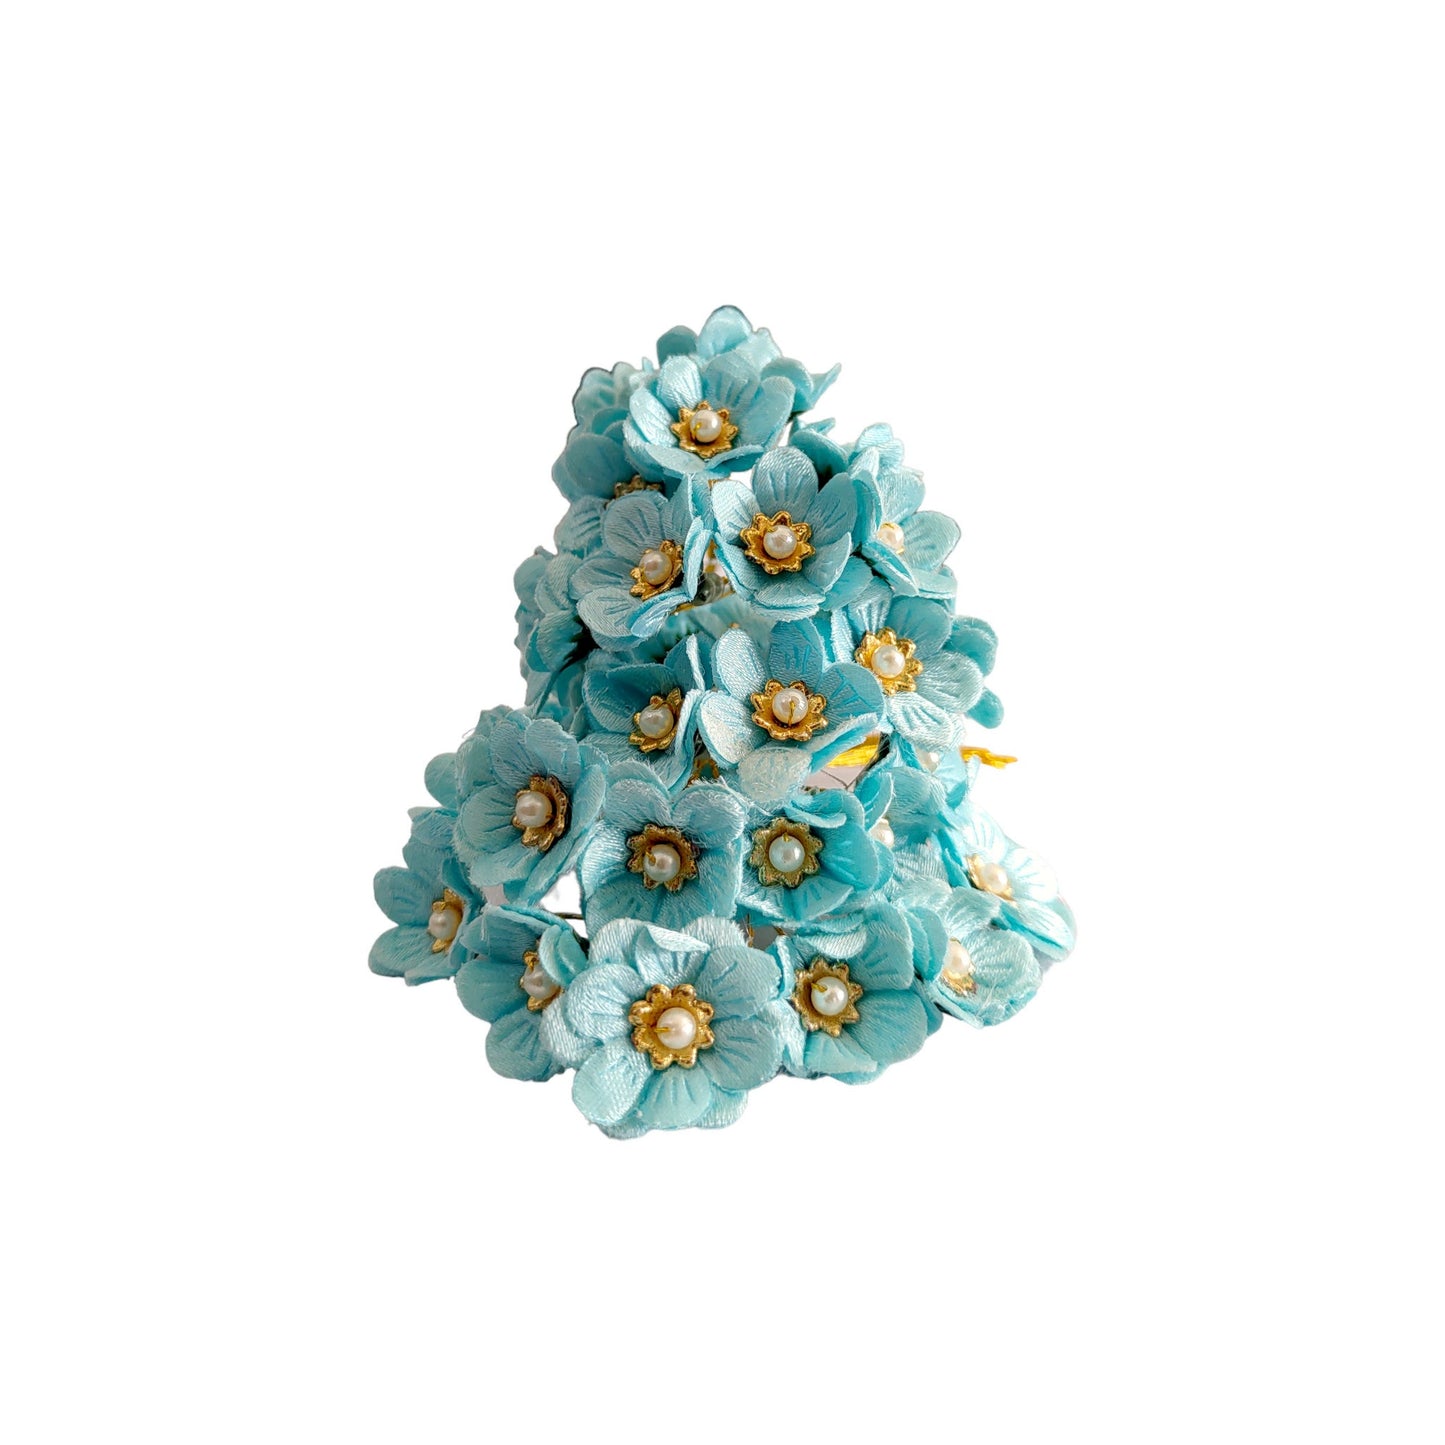 Decorative Artificial Primrose Fabric Flower for Decor, Craft or Textile, 60Pcs -11134, Sky Blue